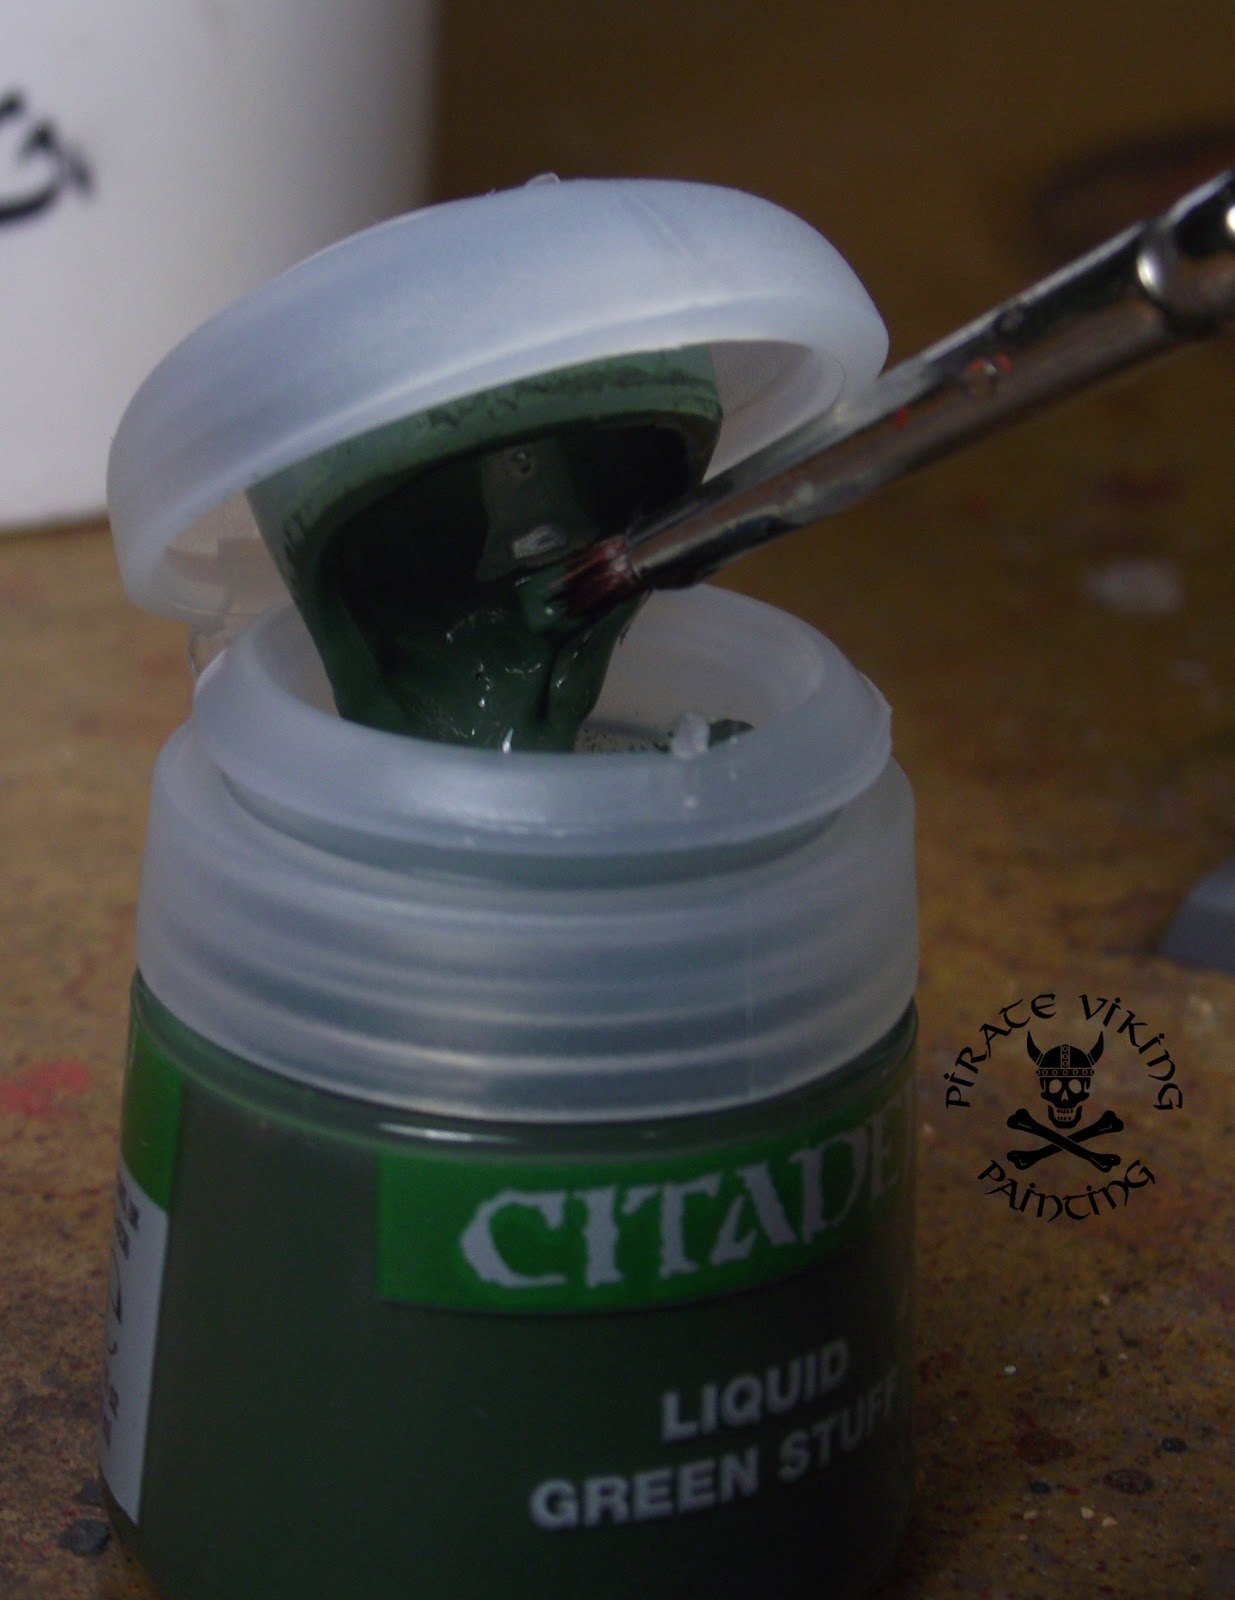 Pirate Viking Painting: Liquid Green Stuff review